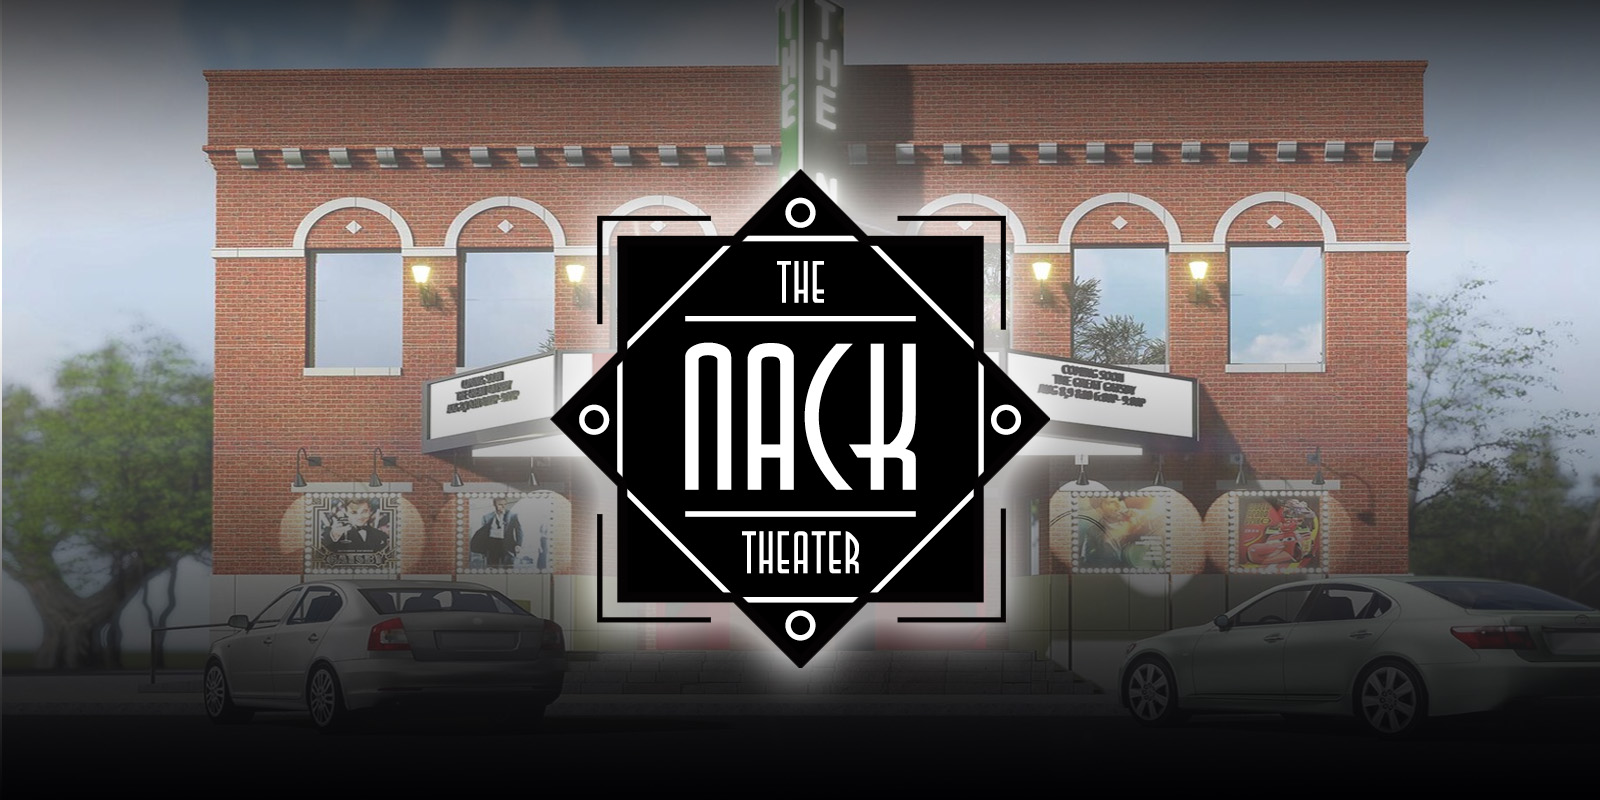 Nackt theatre